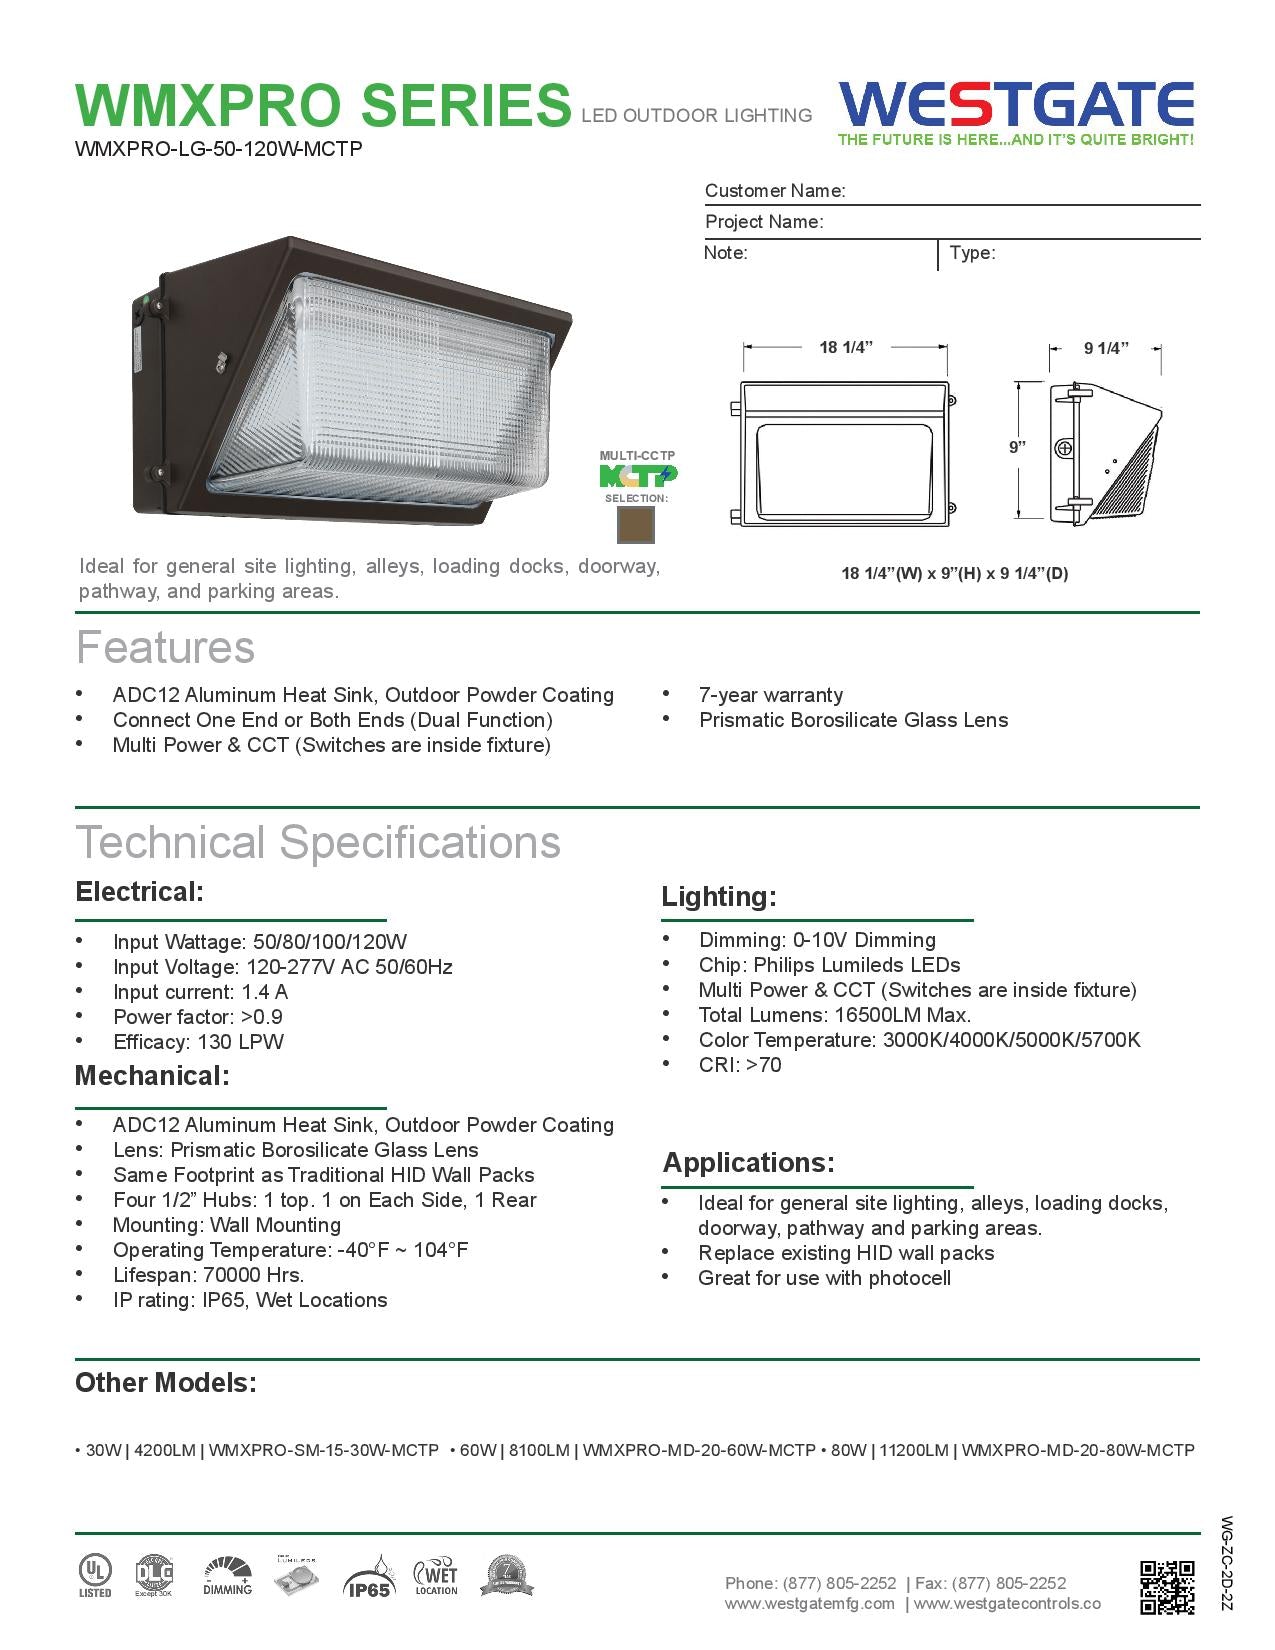 WESTGATE LED Multi-Power & Multi-CCT Non-Cutoff Wall Packs (WMX-SERIES)